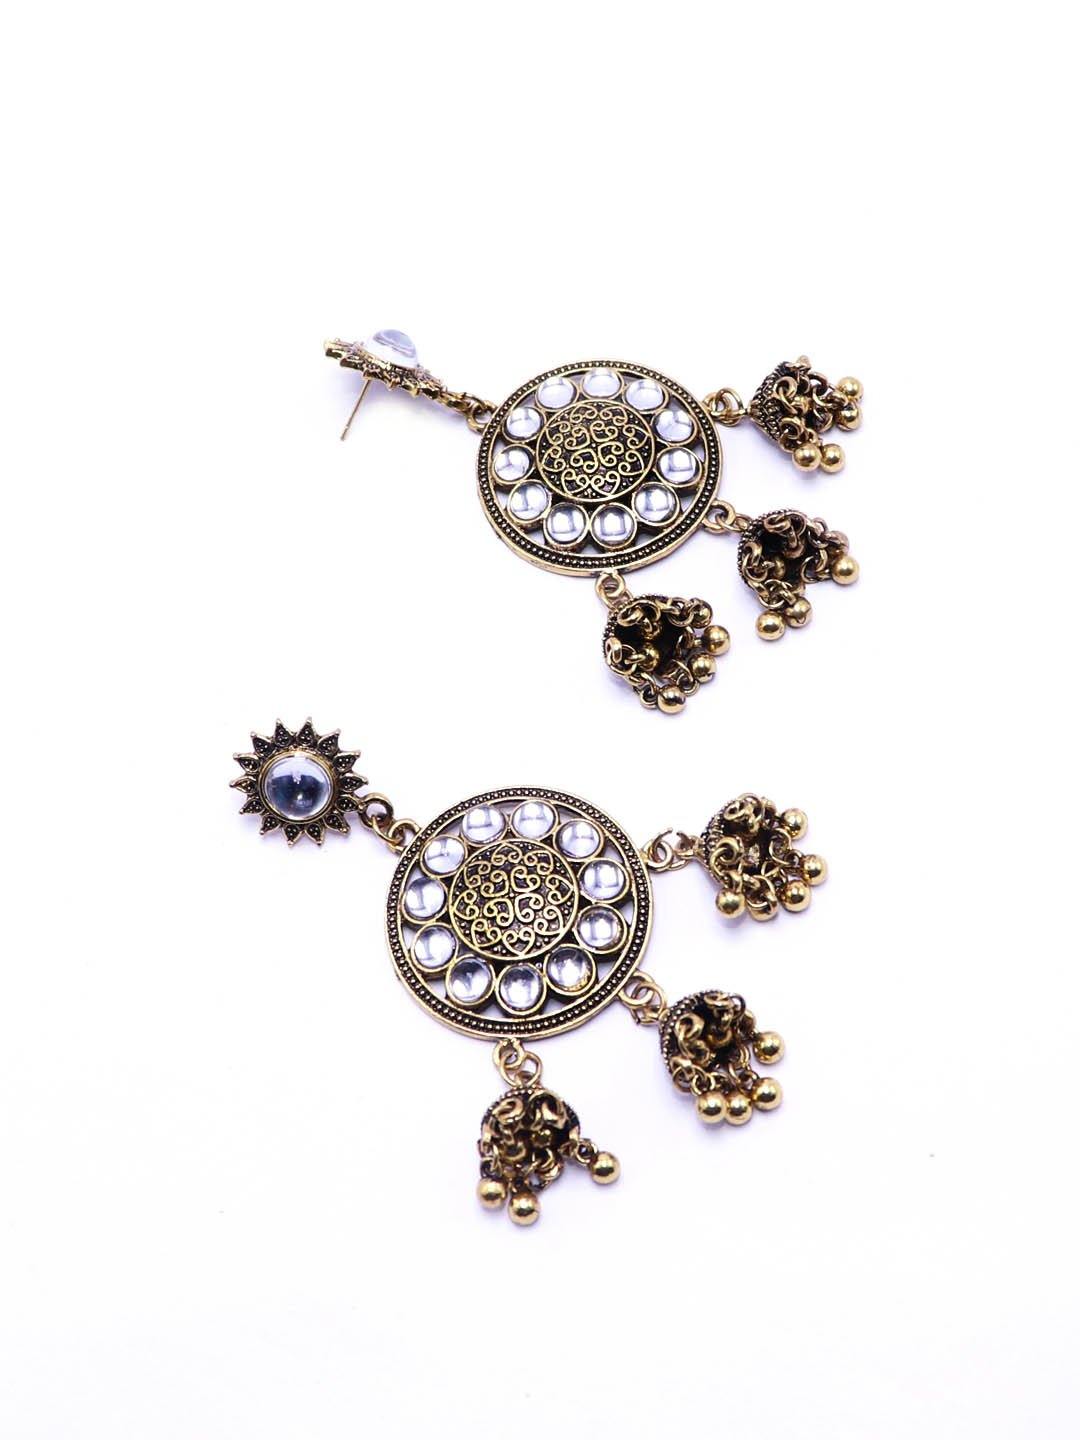 Drop earrings with jhumka pics